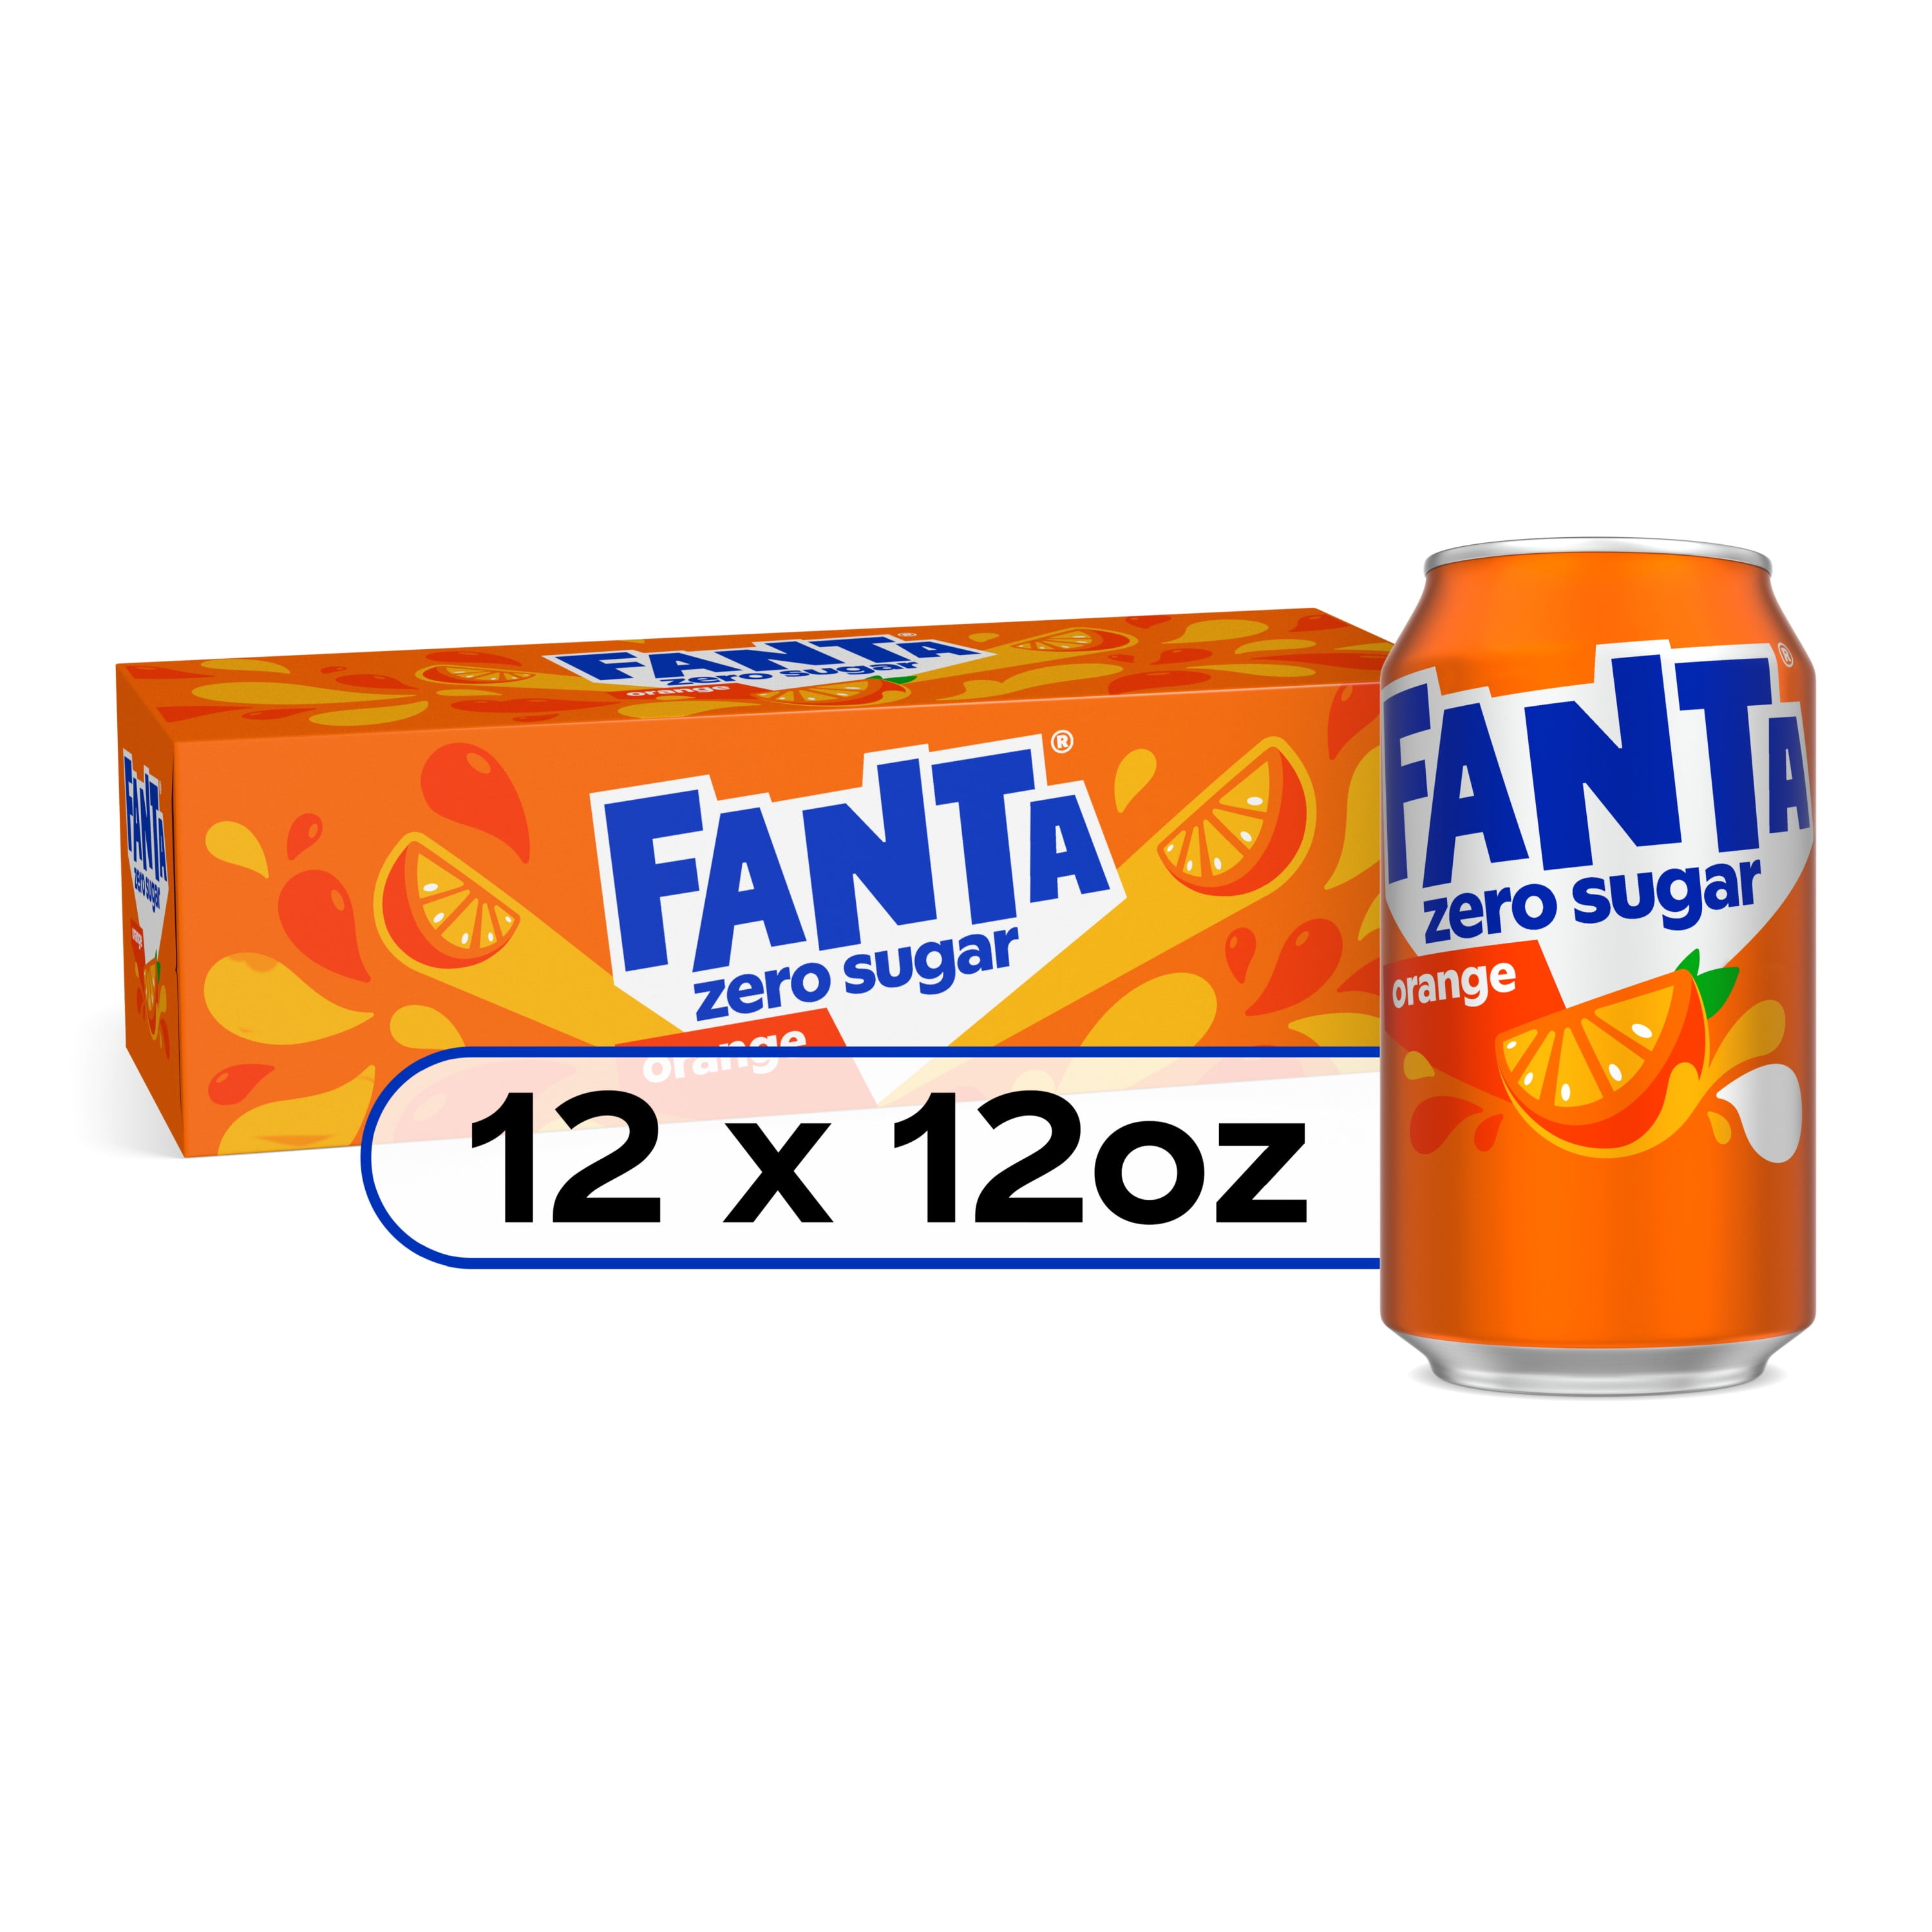 Fanta Orange Fruit Soda Pop, 16.9 fl oz, 6 Pack Bottles 